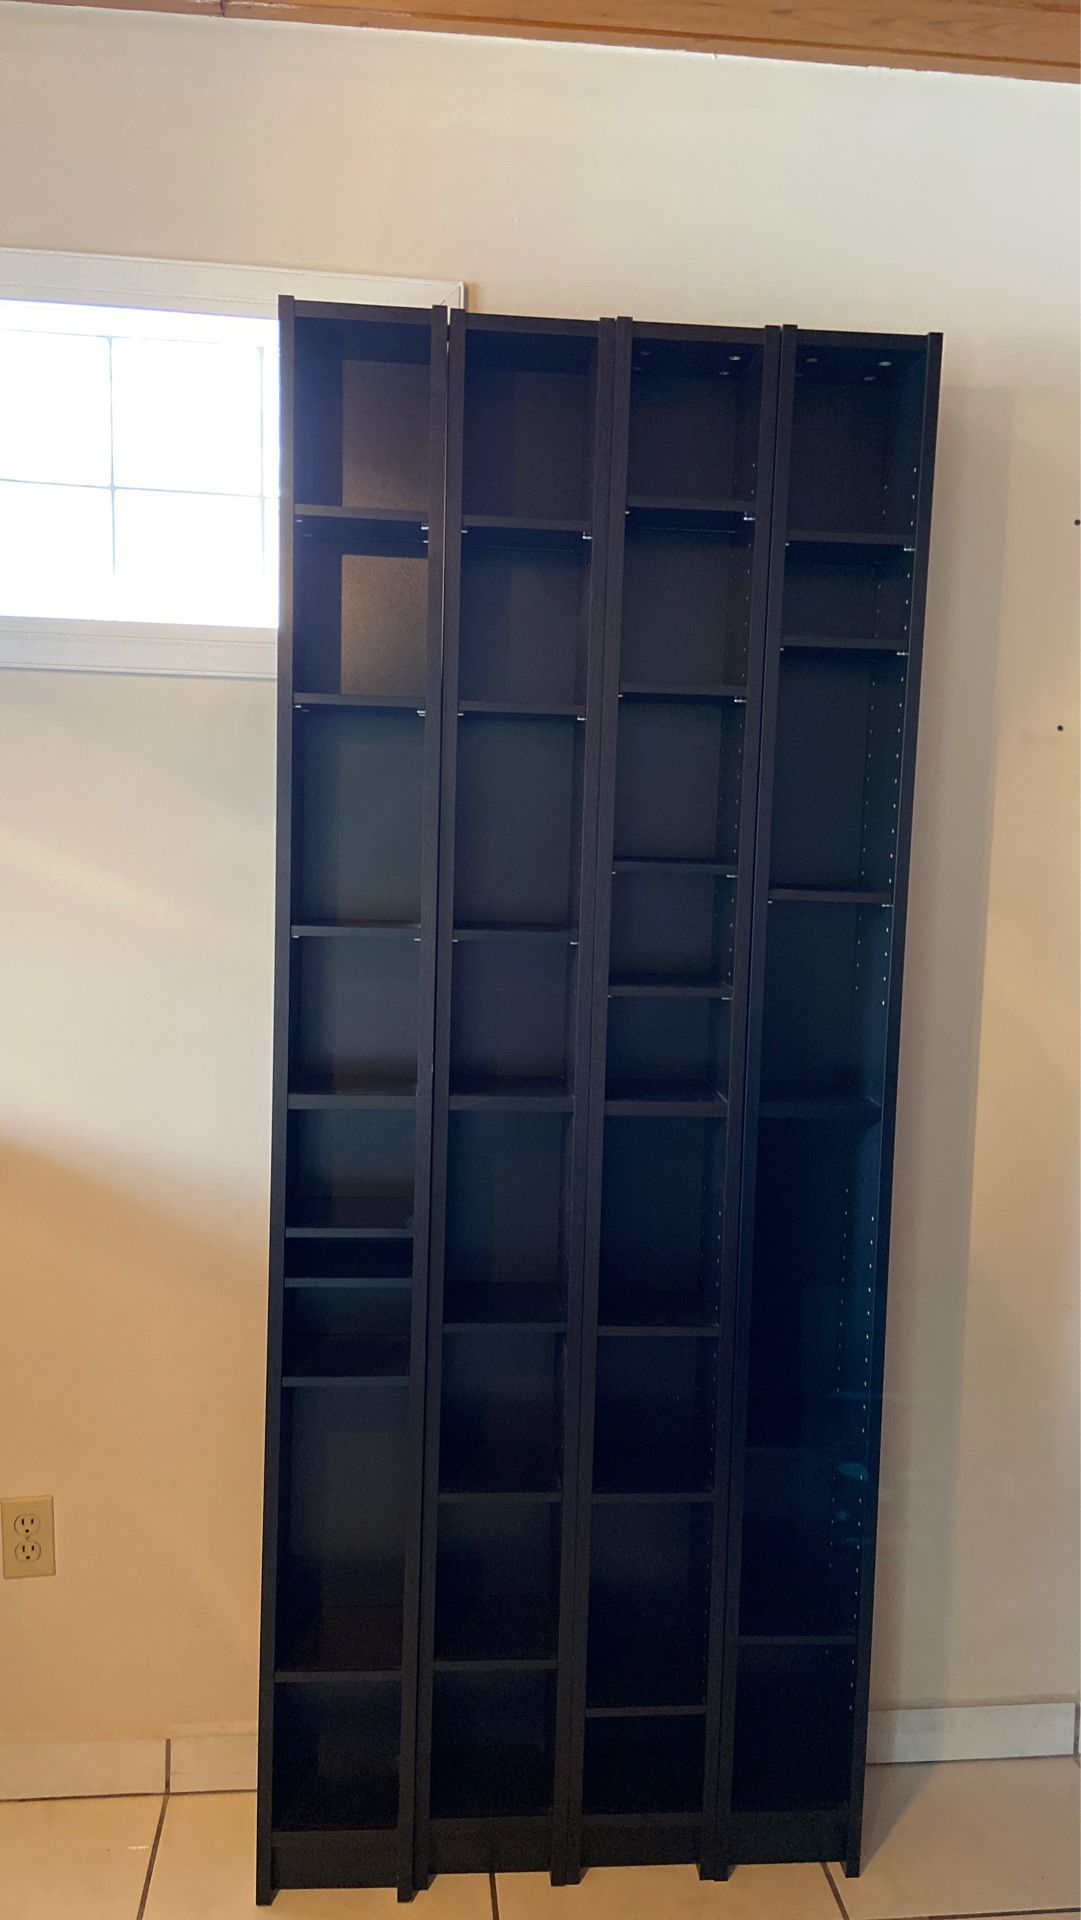 Shelving-black, 79” tall, 31” 1/2 wide, adjustable shelves.